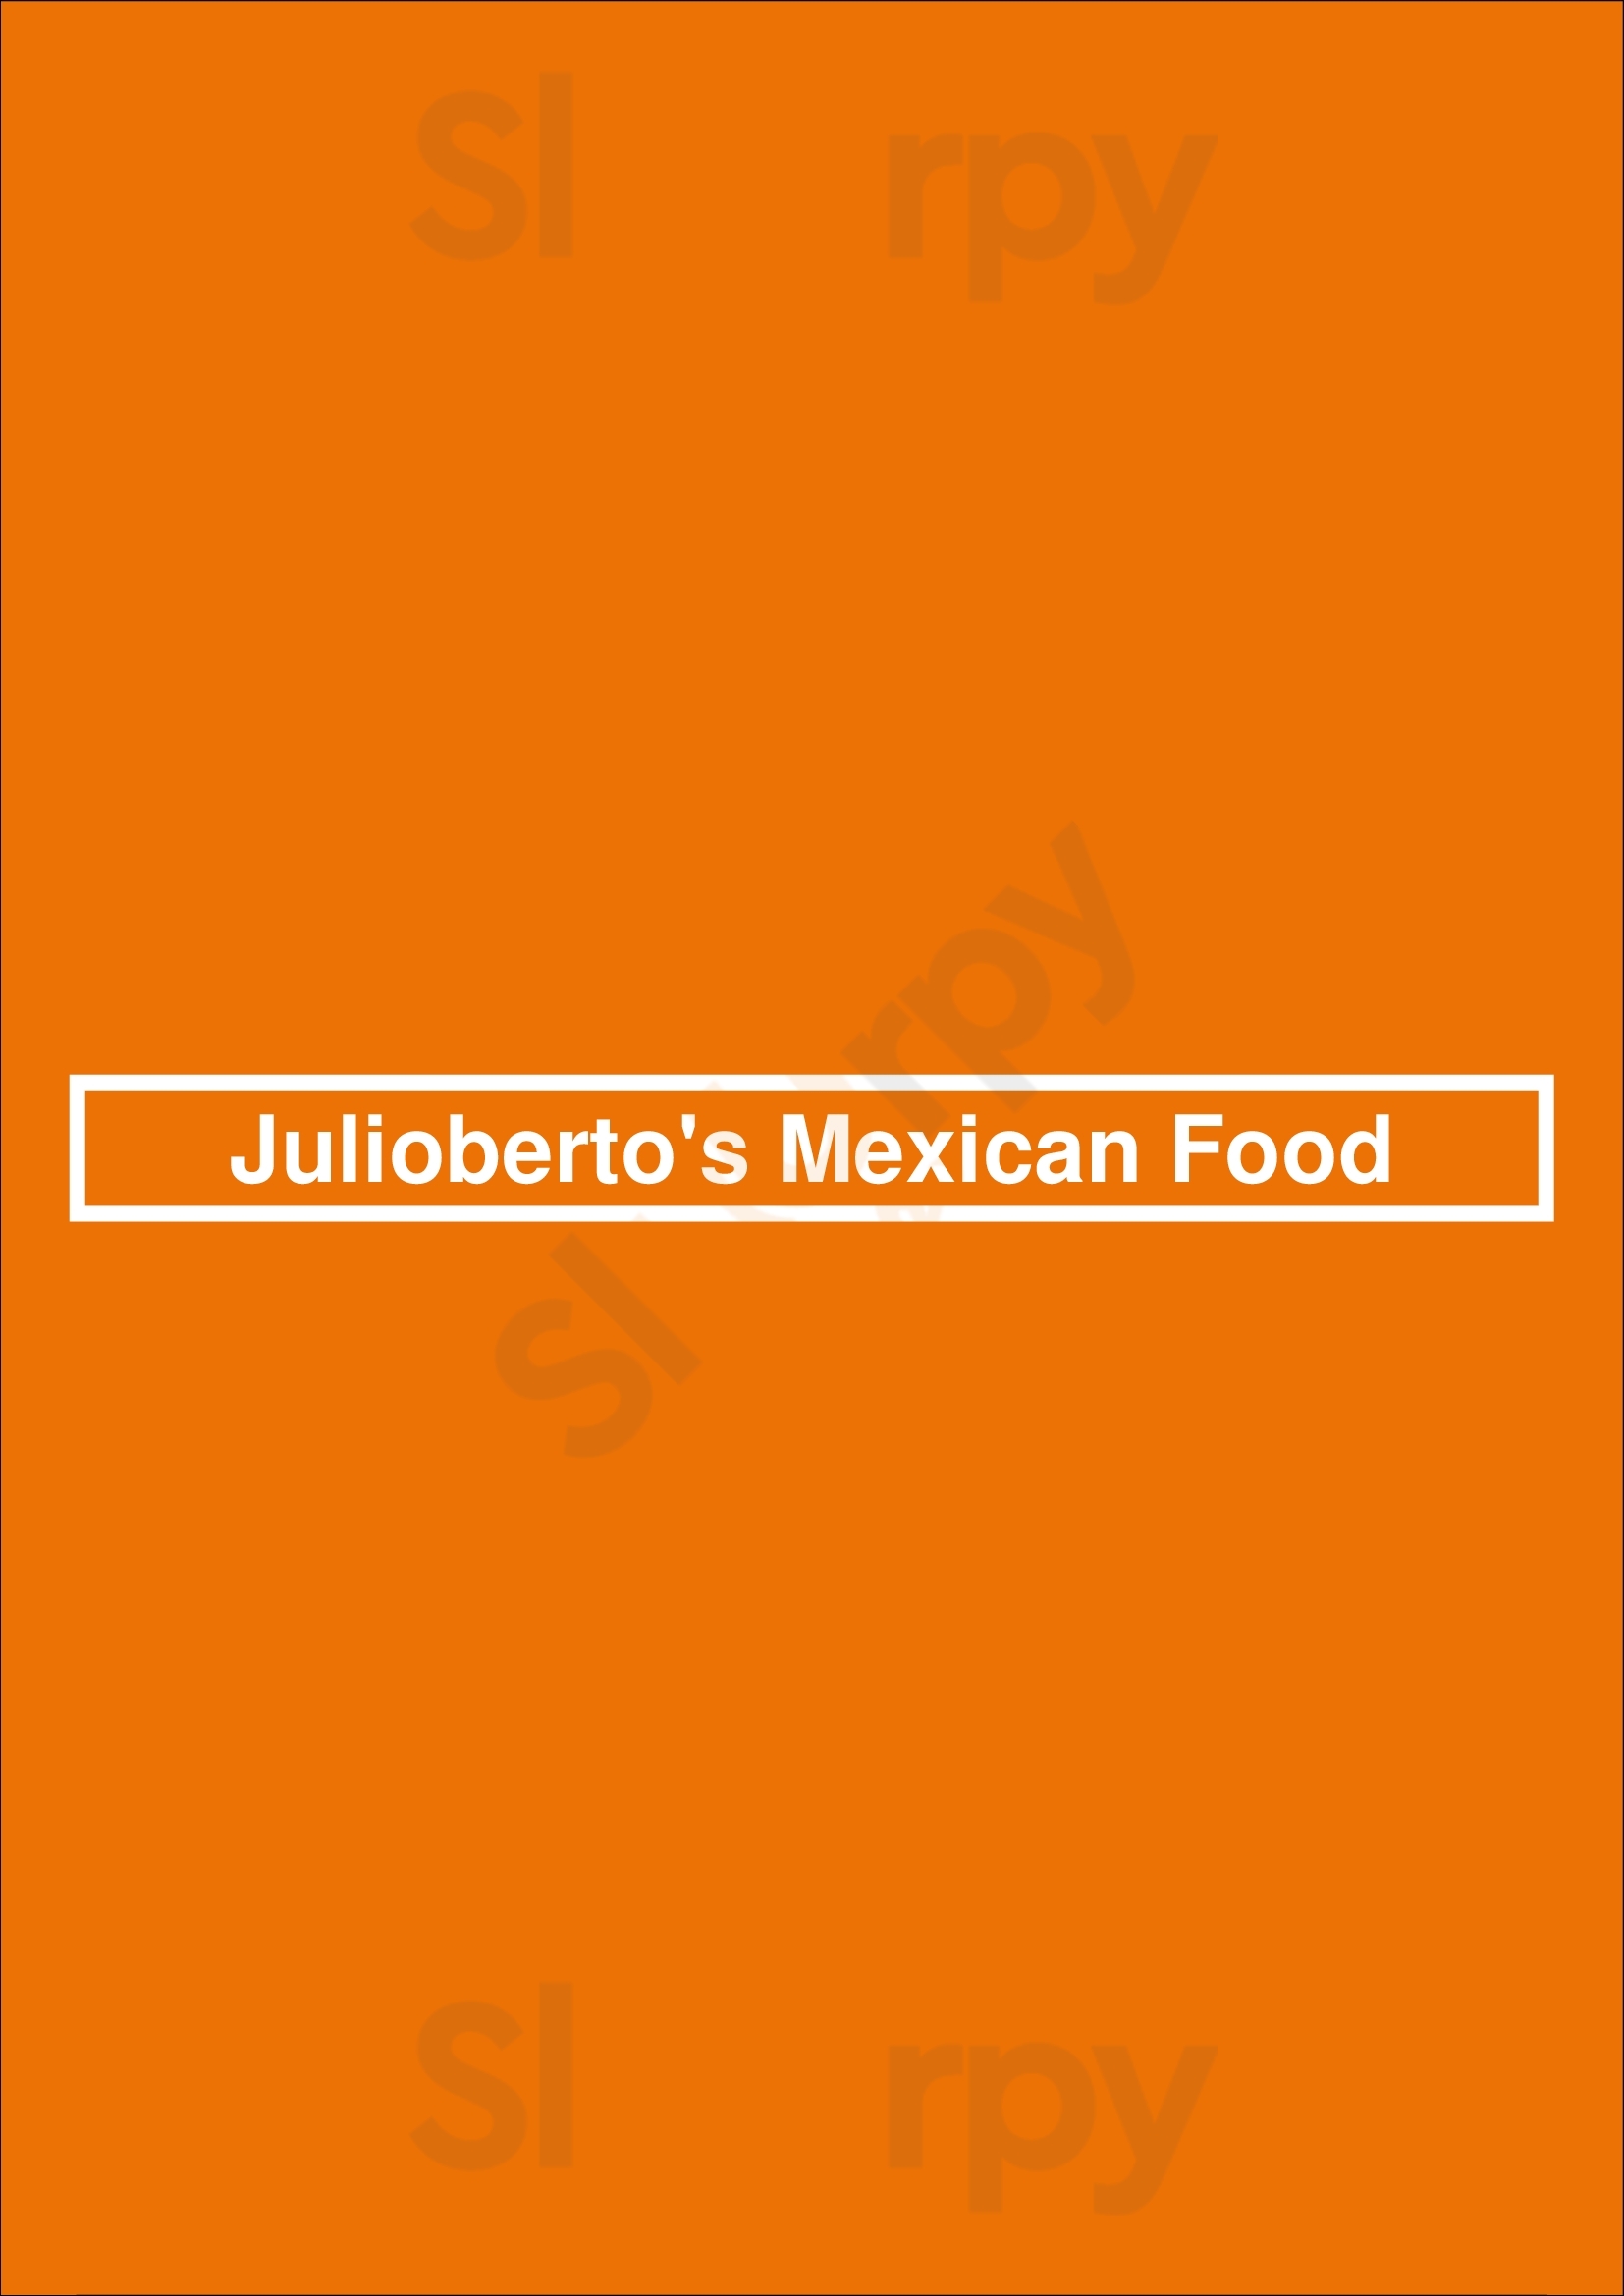 Juliobertos Mexican Food Phoenix Menu - 1